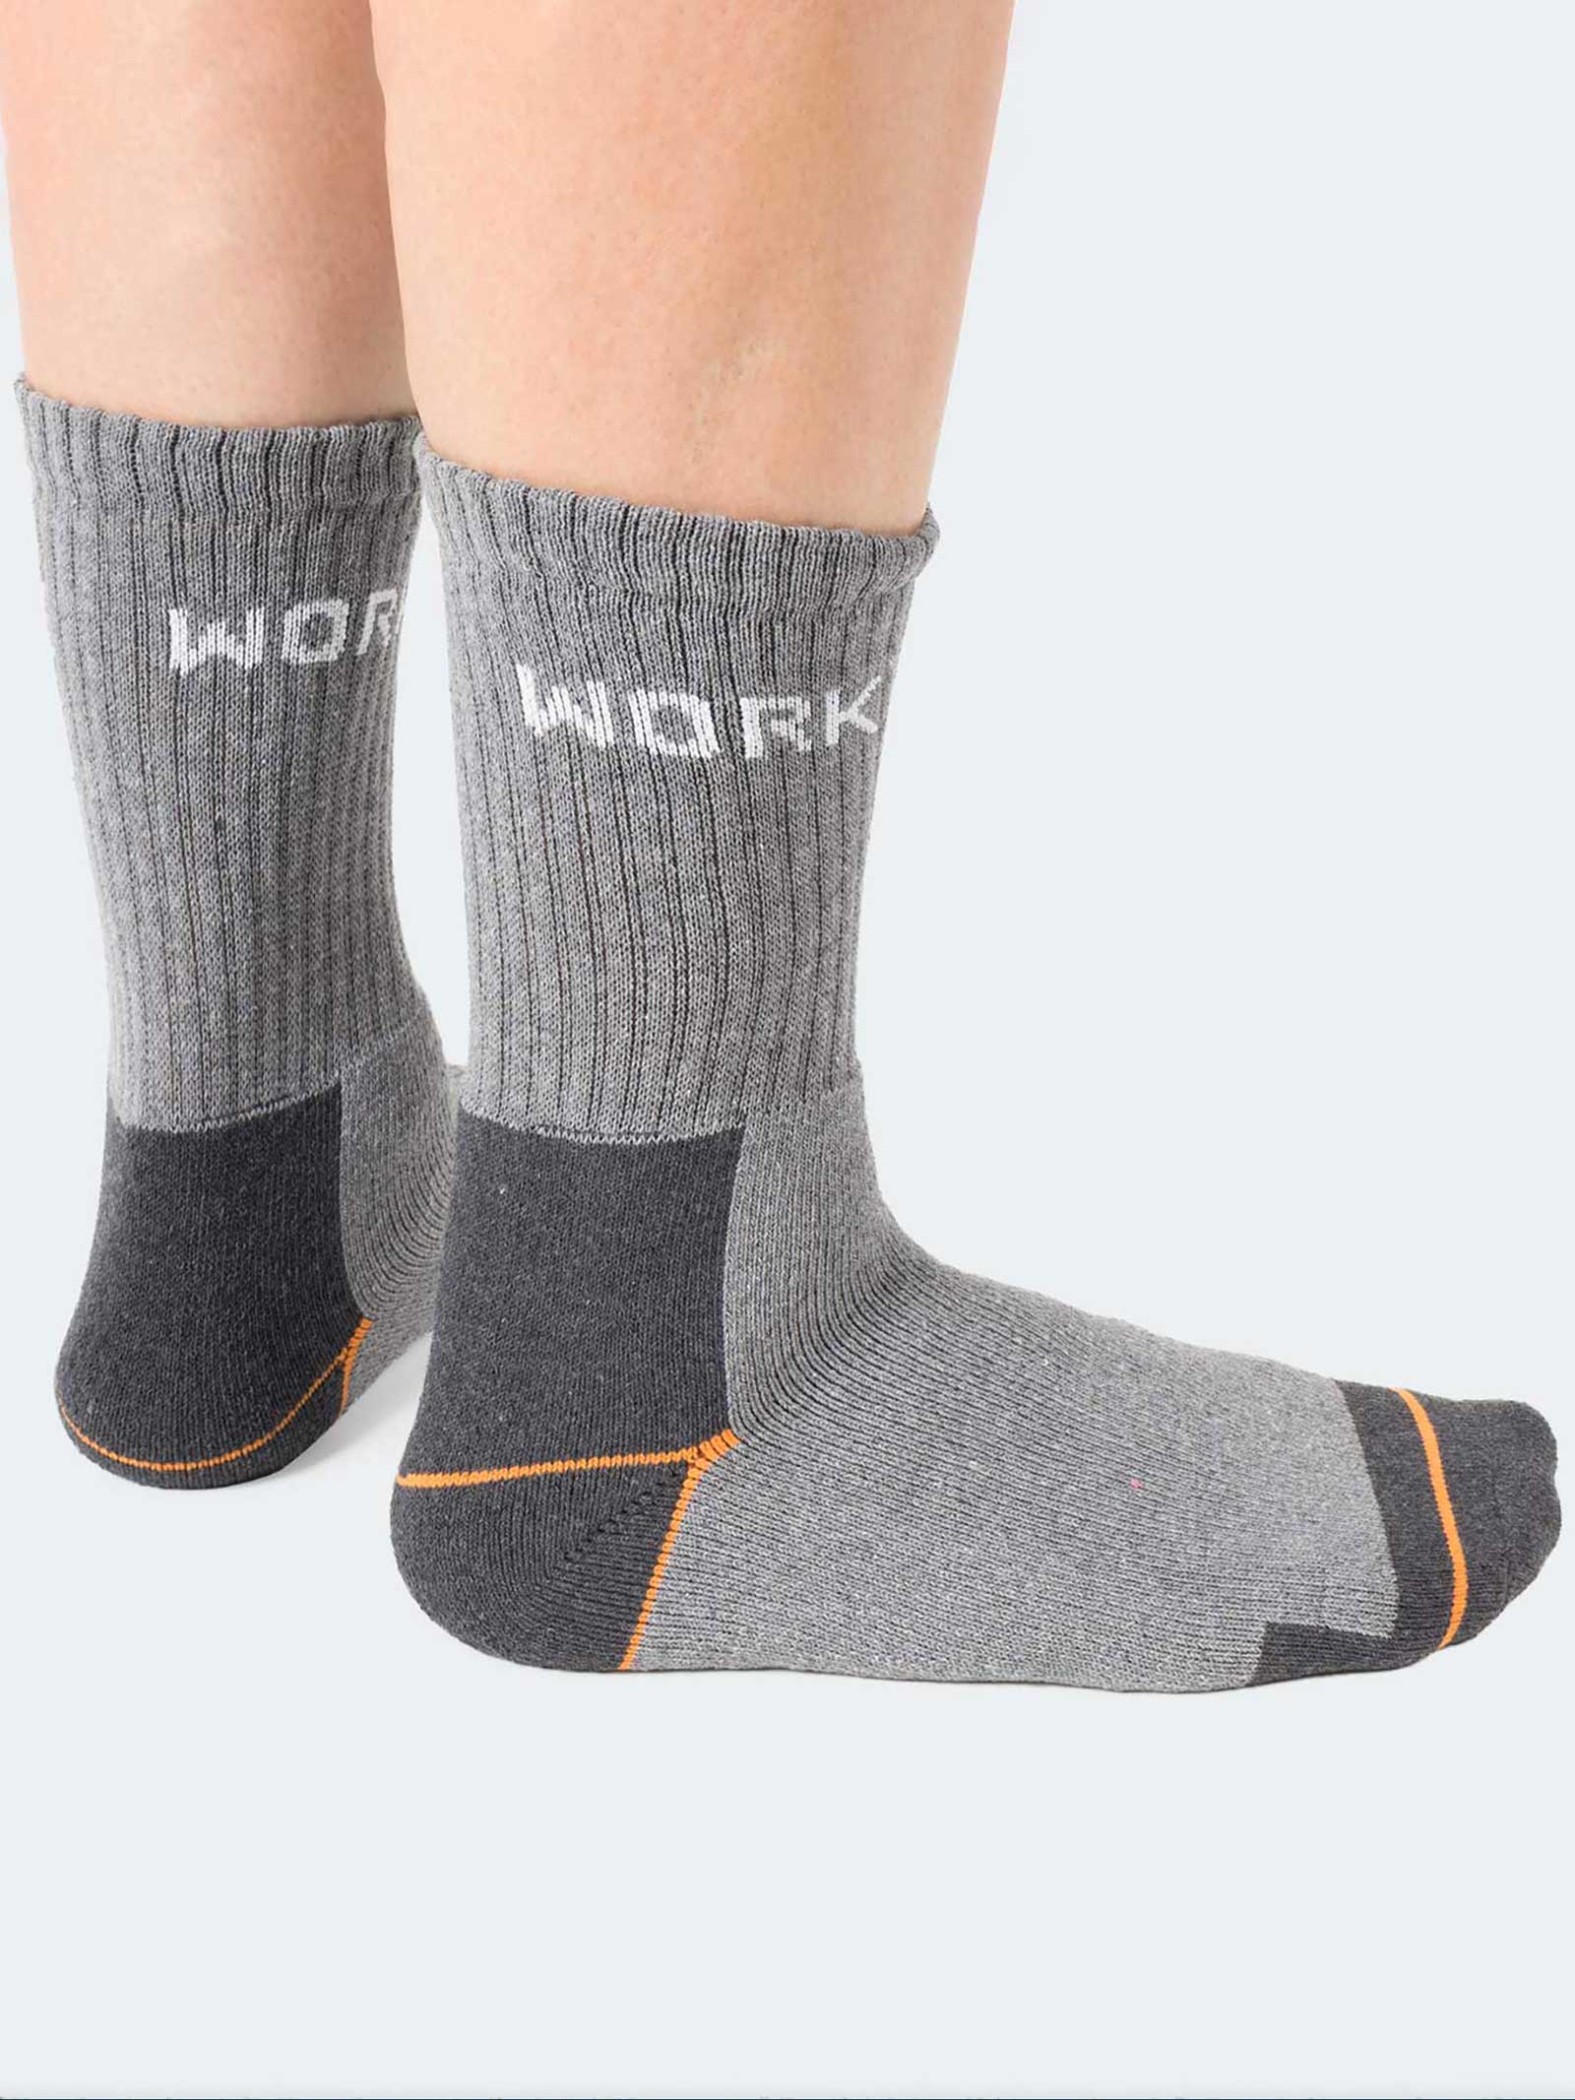 Three Men's Short Calf Socks, Baumwolle und Frottee - verstärkt